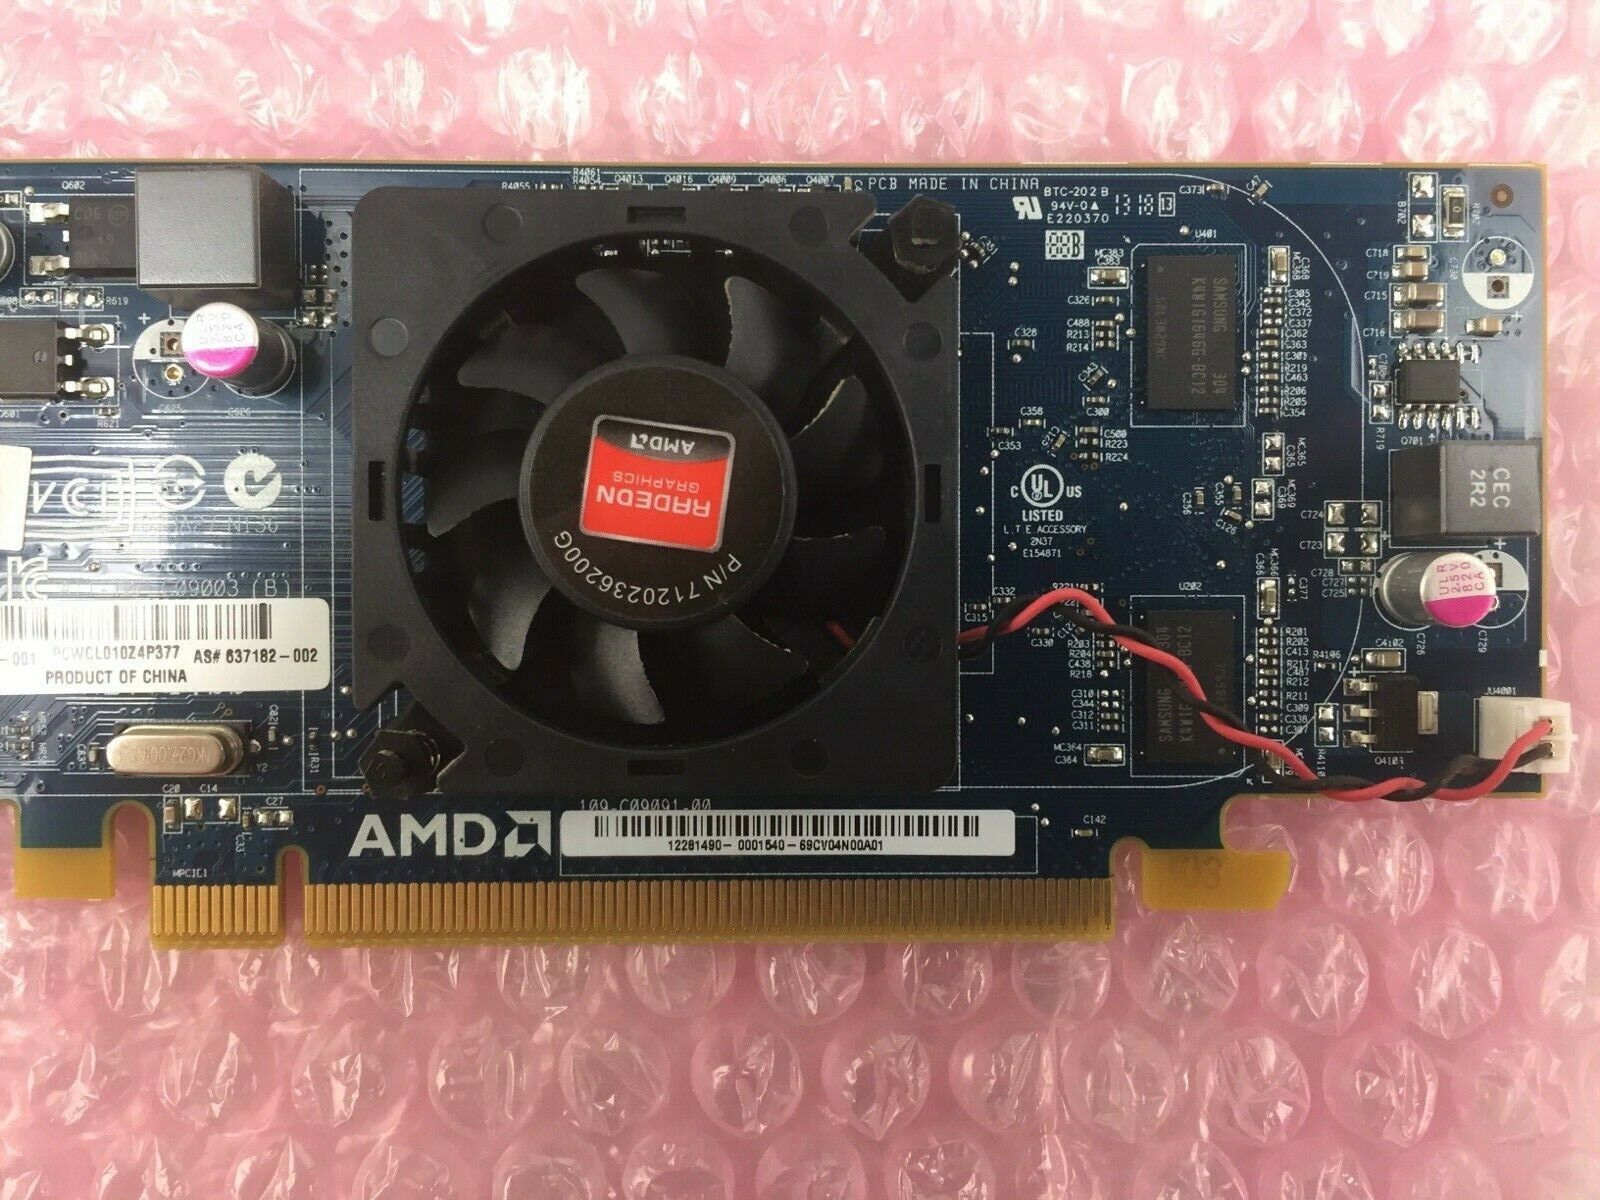 Dell AMD Radeon ATI-102-C09003 (B) 512MB PCI Express Video Card Low Profile